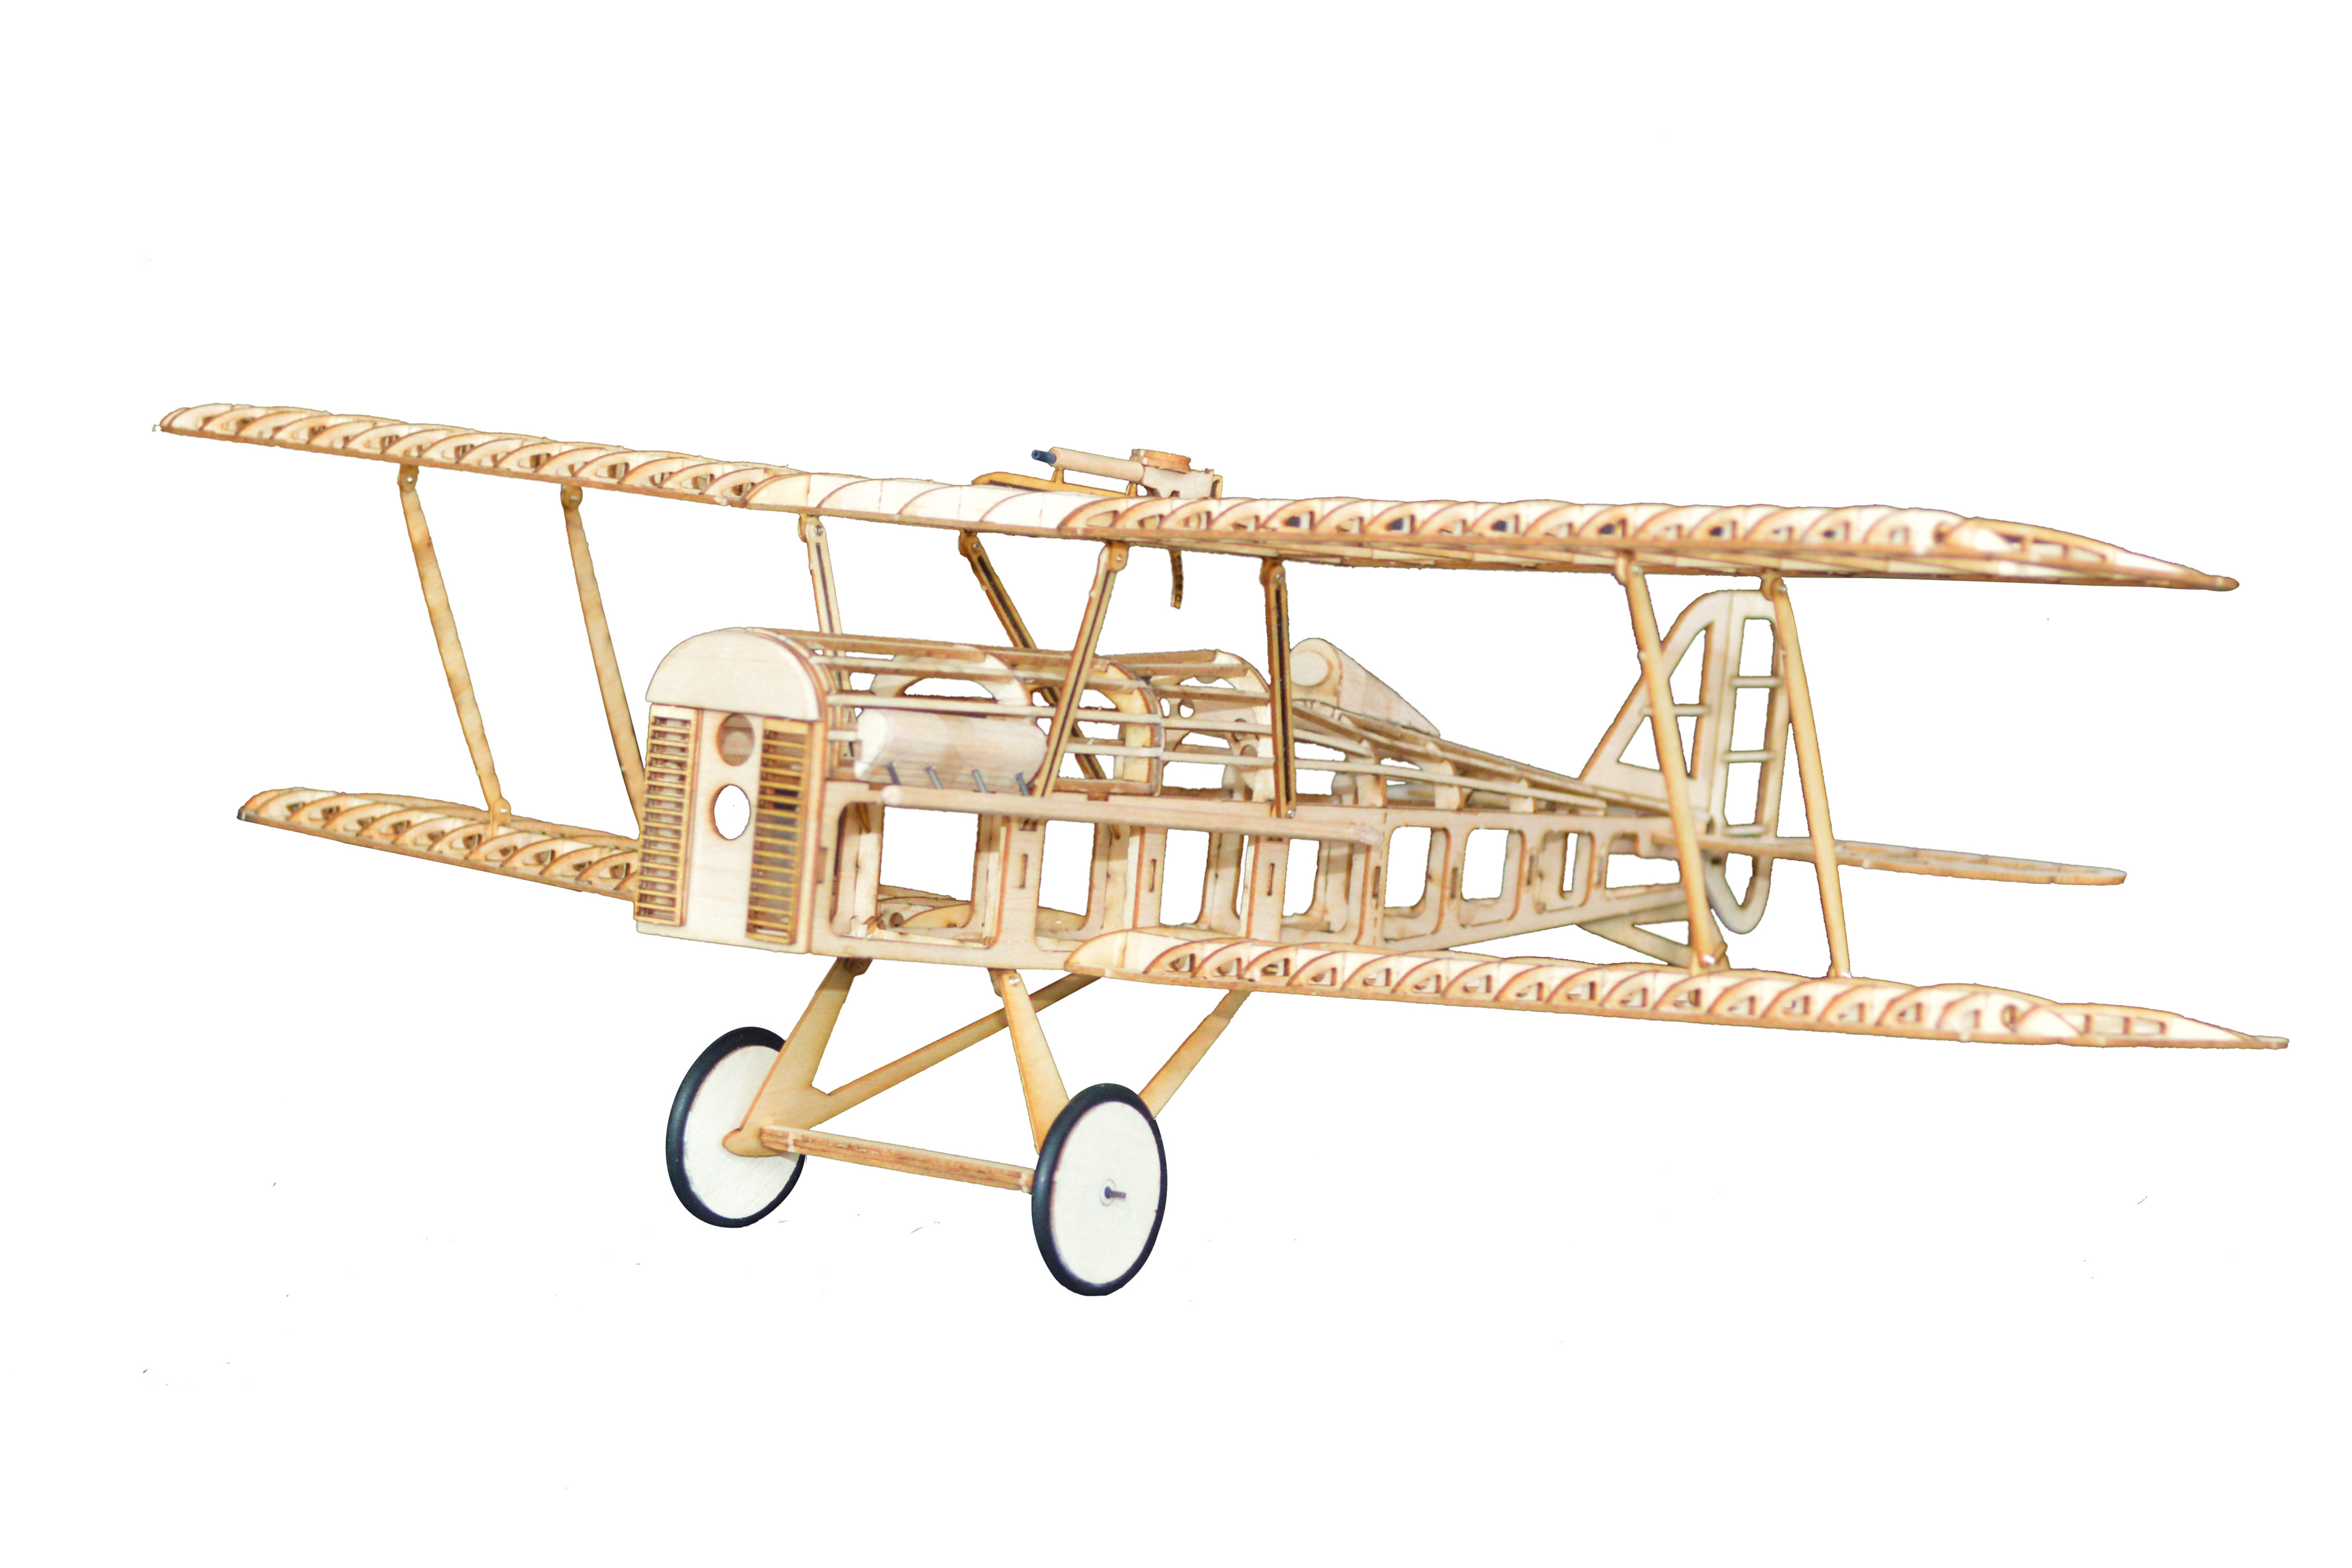 Tony-Rays-AeroModel-RAF-SE5a-480mm-Wingspan-Balsa-Wood-Laser-Cut-Biplane-RC-Airplane-Warbird-KIT-1798680-1